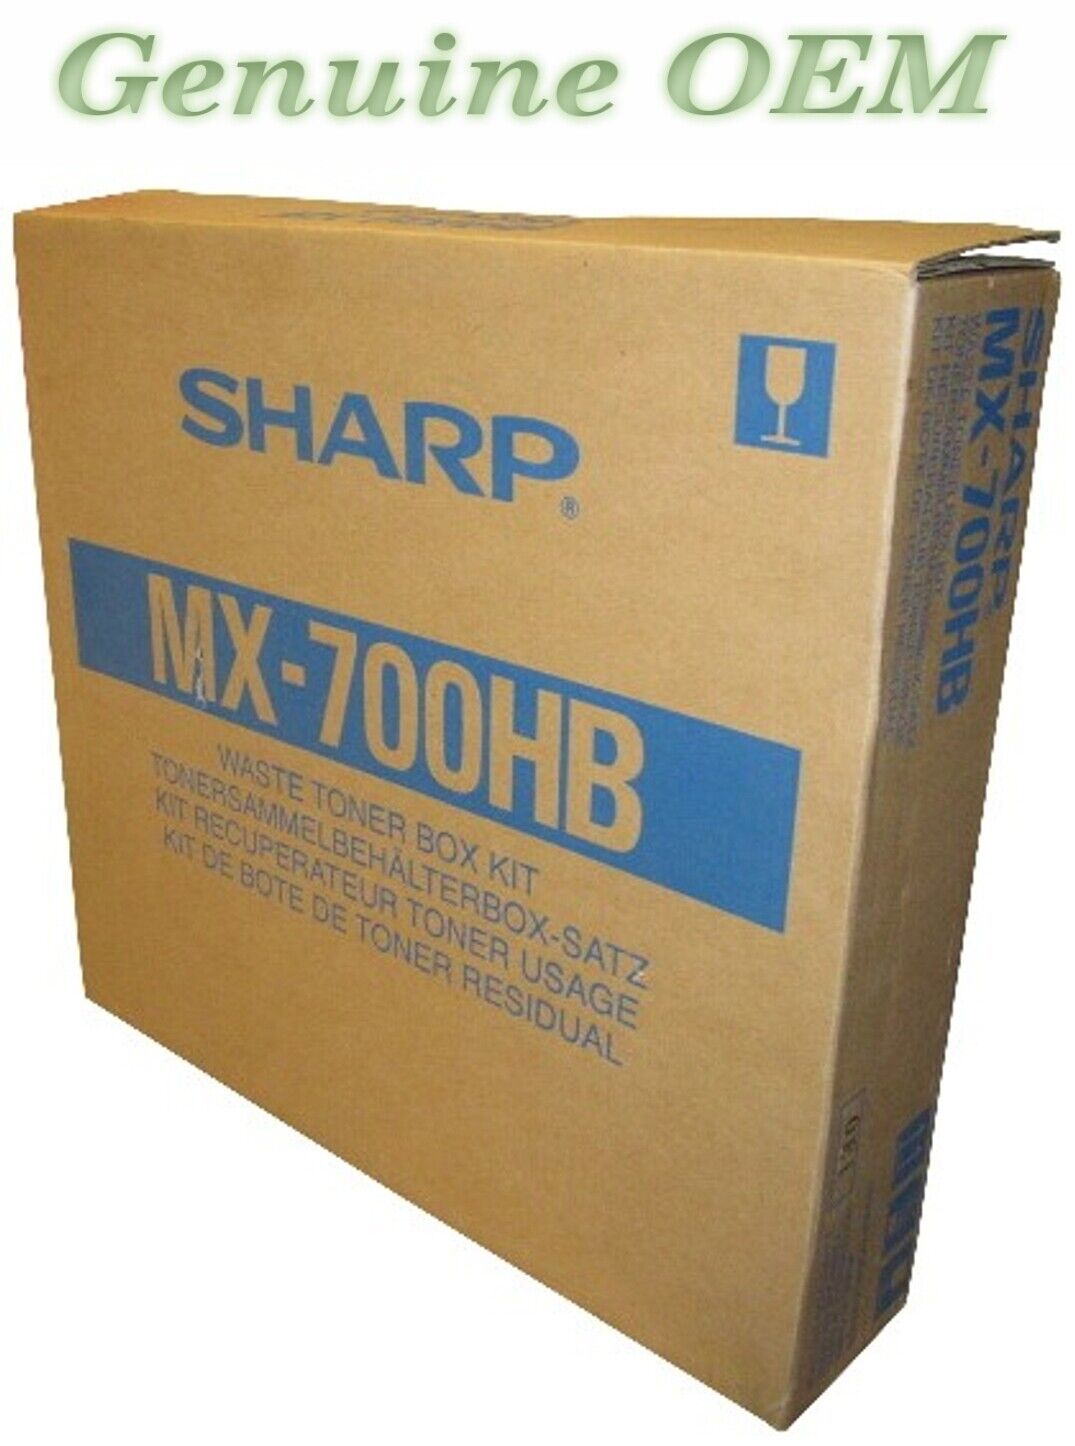 MX-700HB/MX700HB Original OEM Sharp Waste Toner Box Kit Genuine Sealed